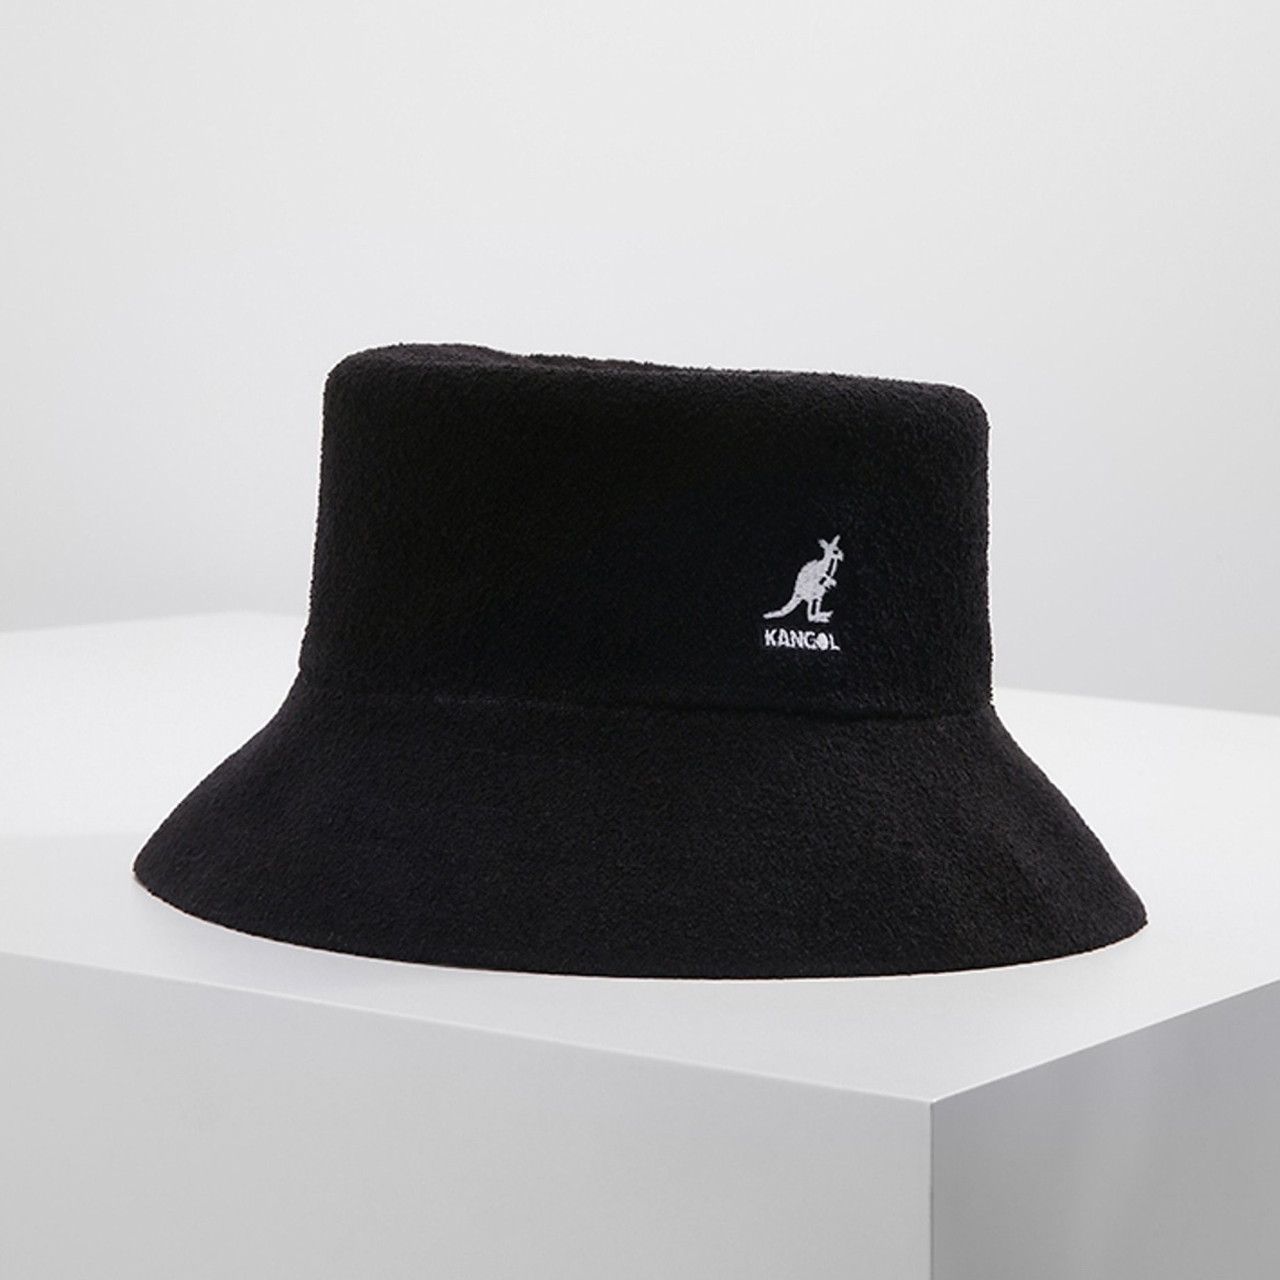 Kangol bucket hat black